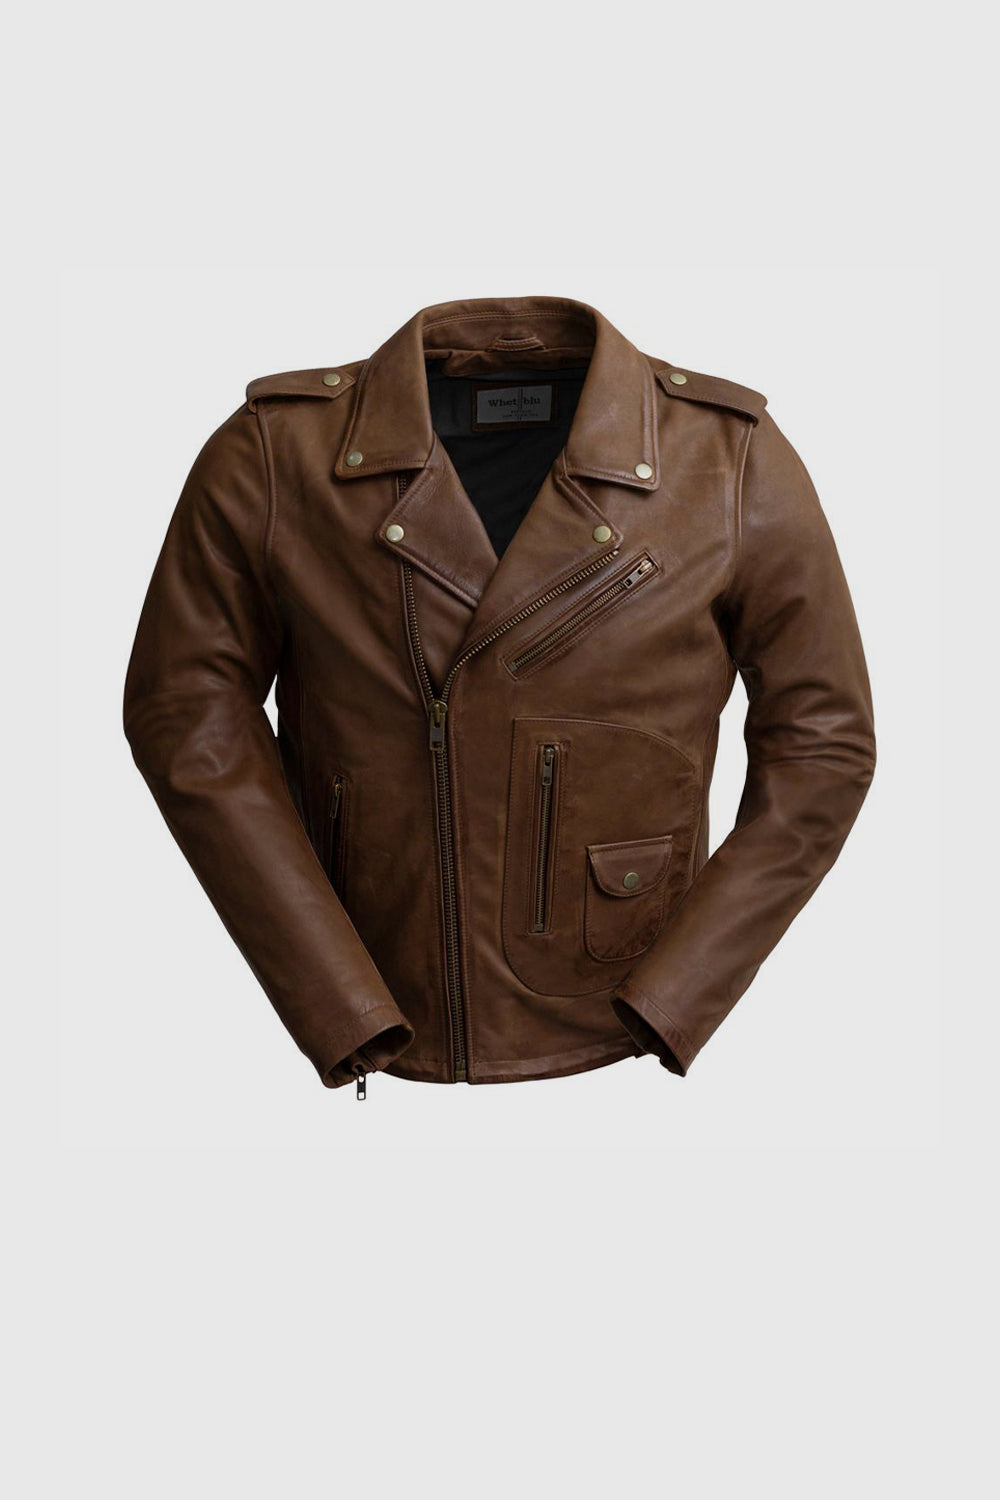 Sid Mens Leather Jacket Men's Motorcycle style Jacket Whet Blu NYC S  